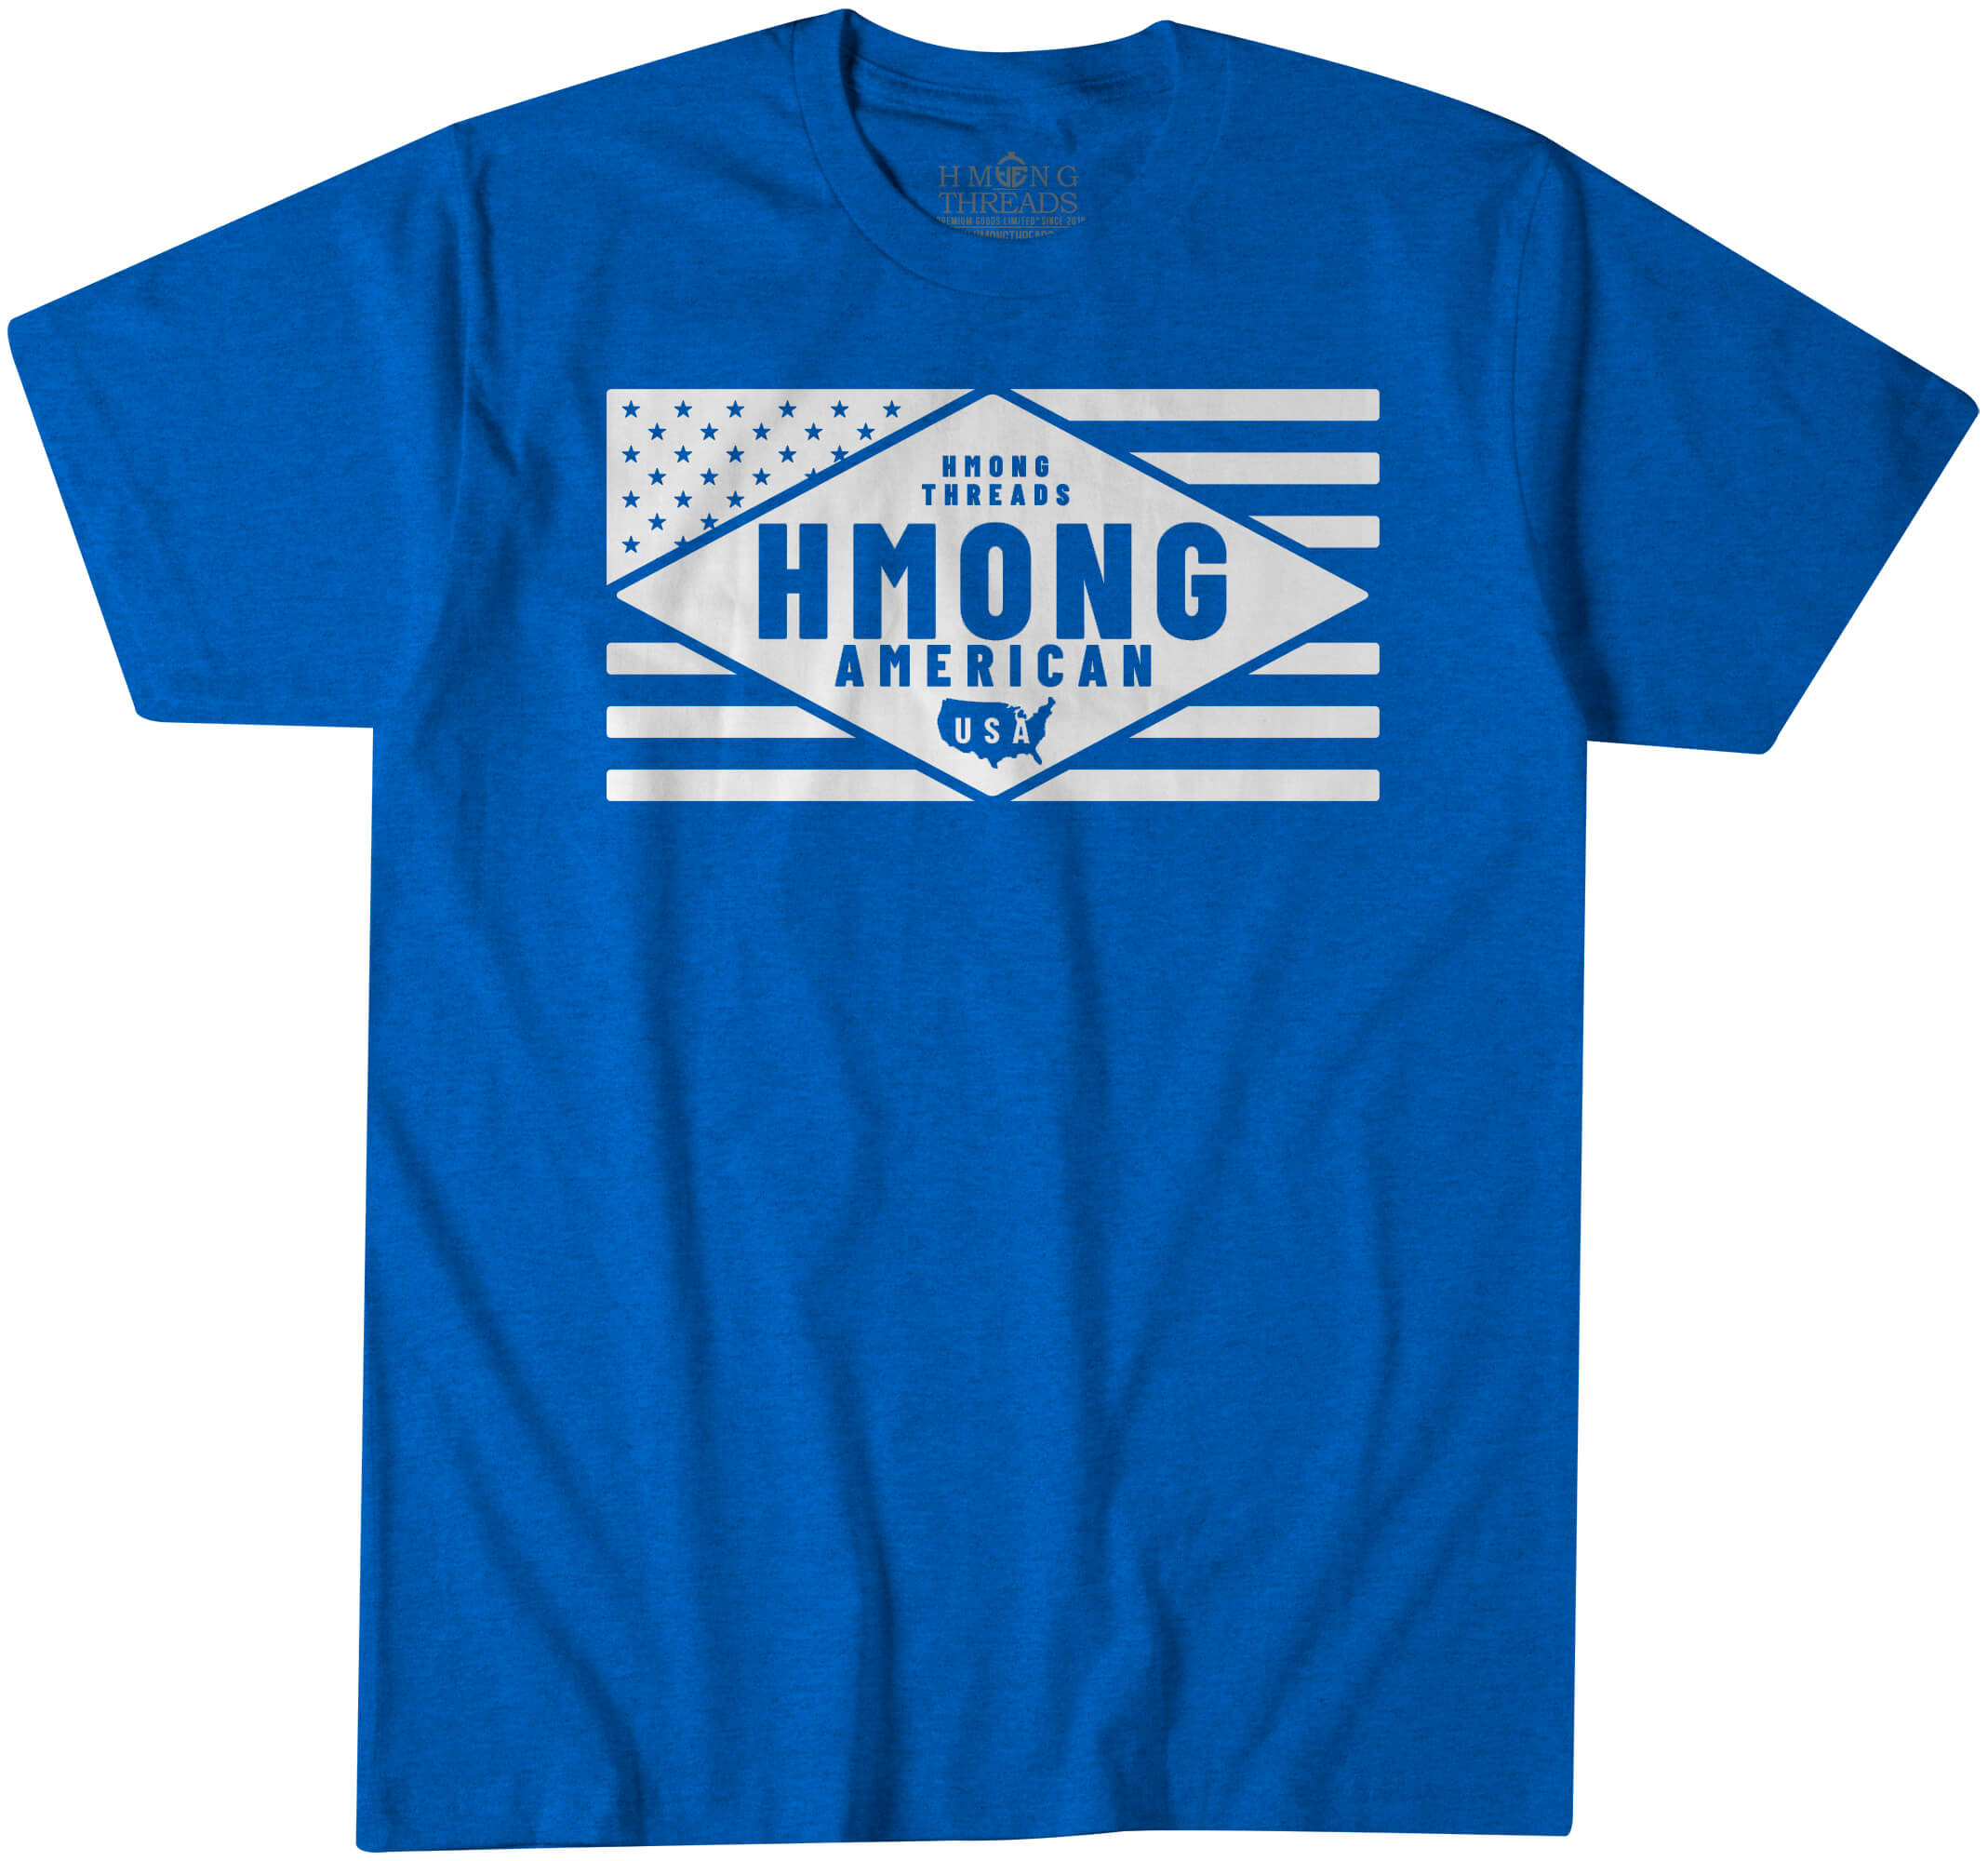 Hmong American T-shirt - Heather Royal Blue